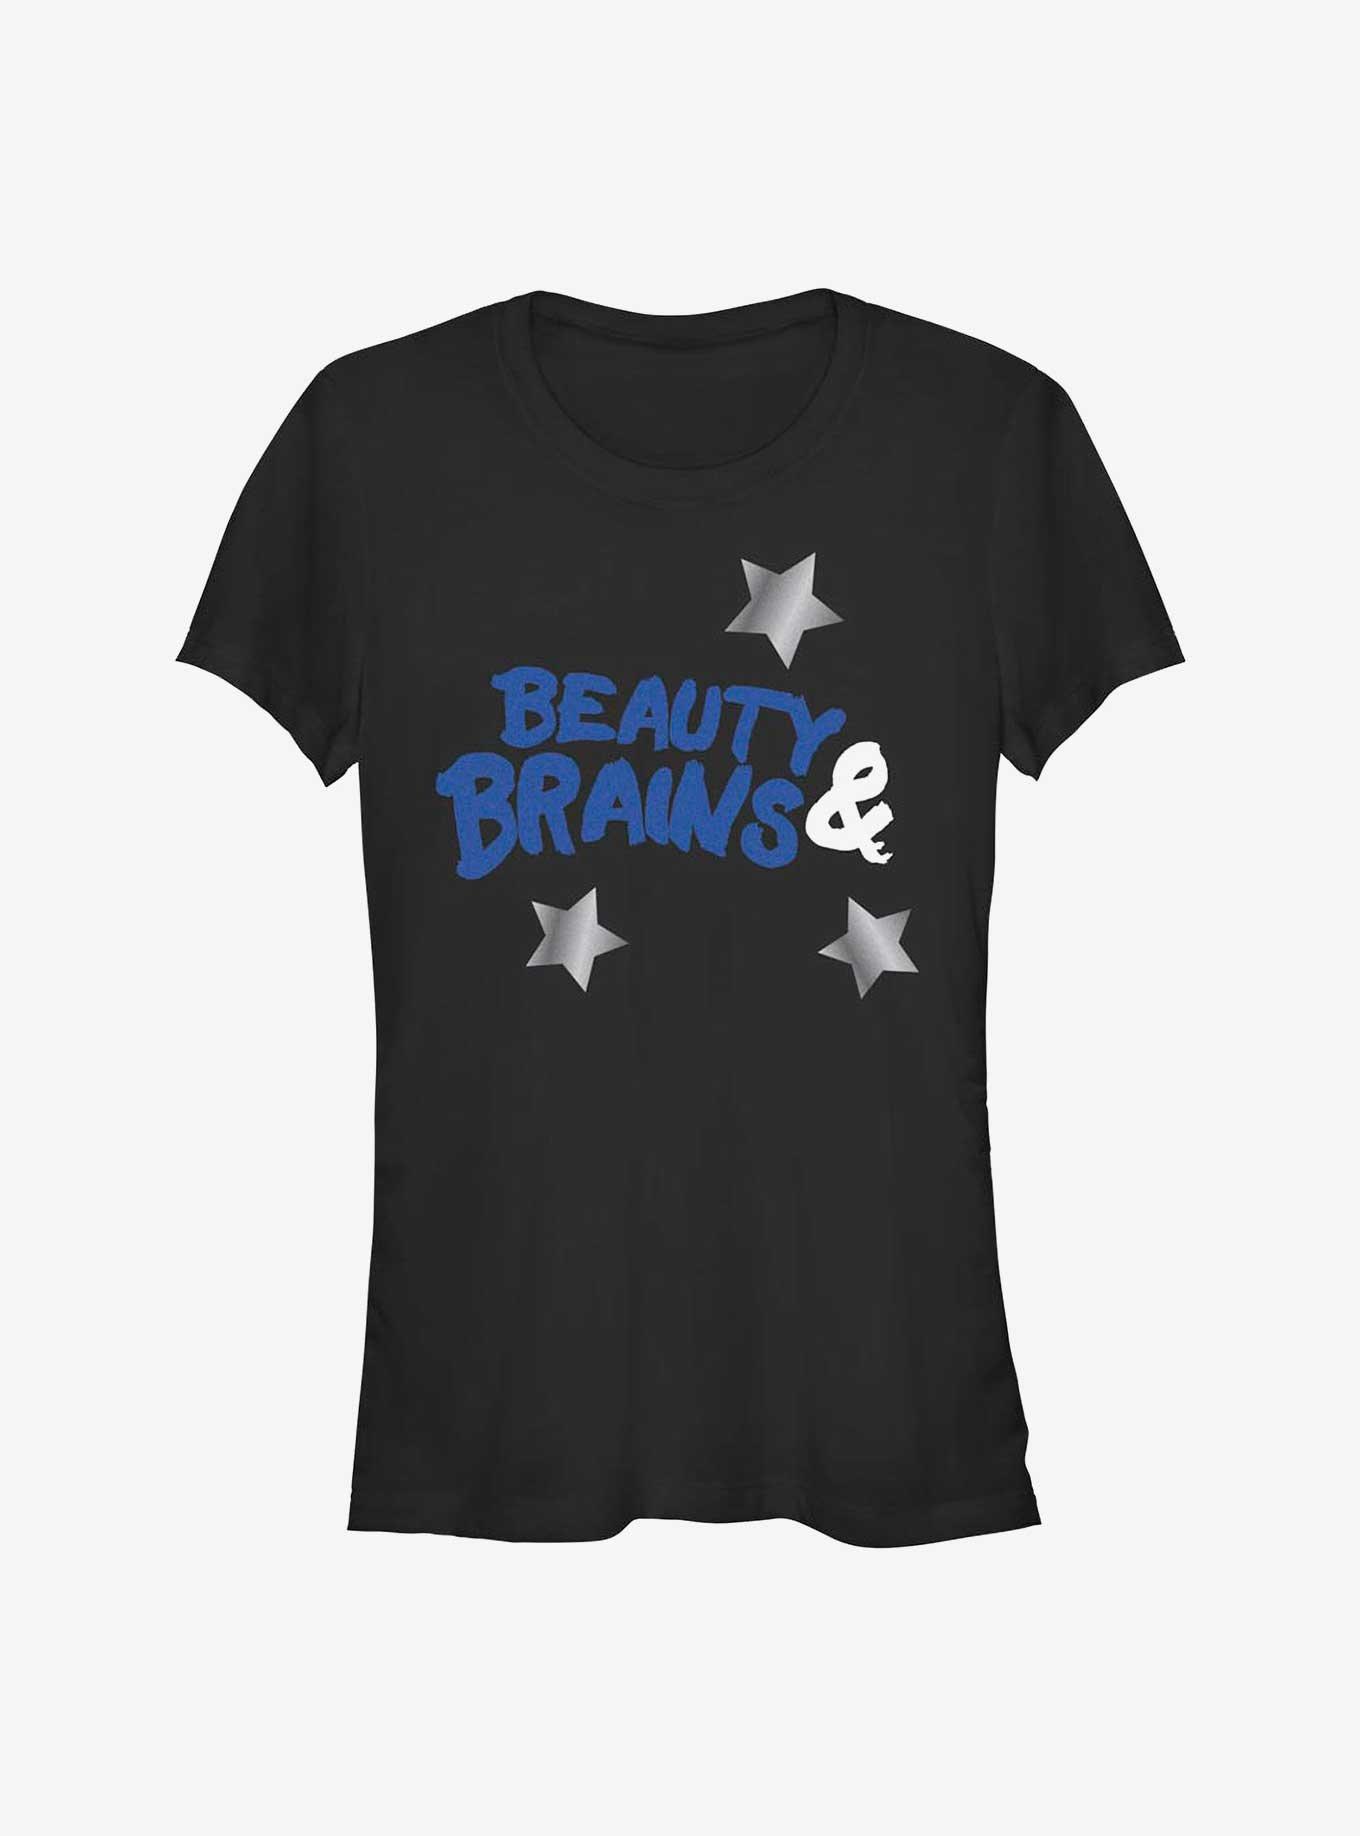 Disney Descendants Beauty And Brains Crown Girls T-Shirt